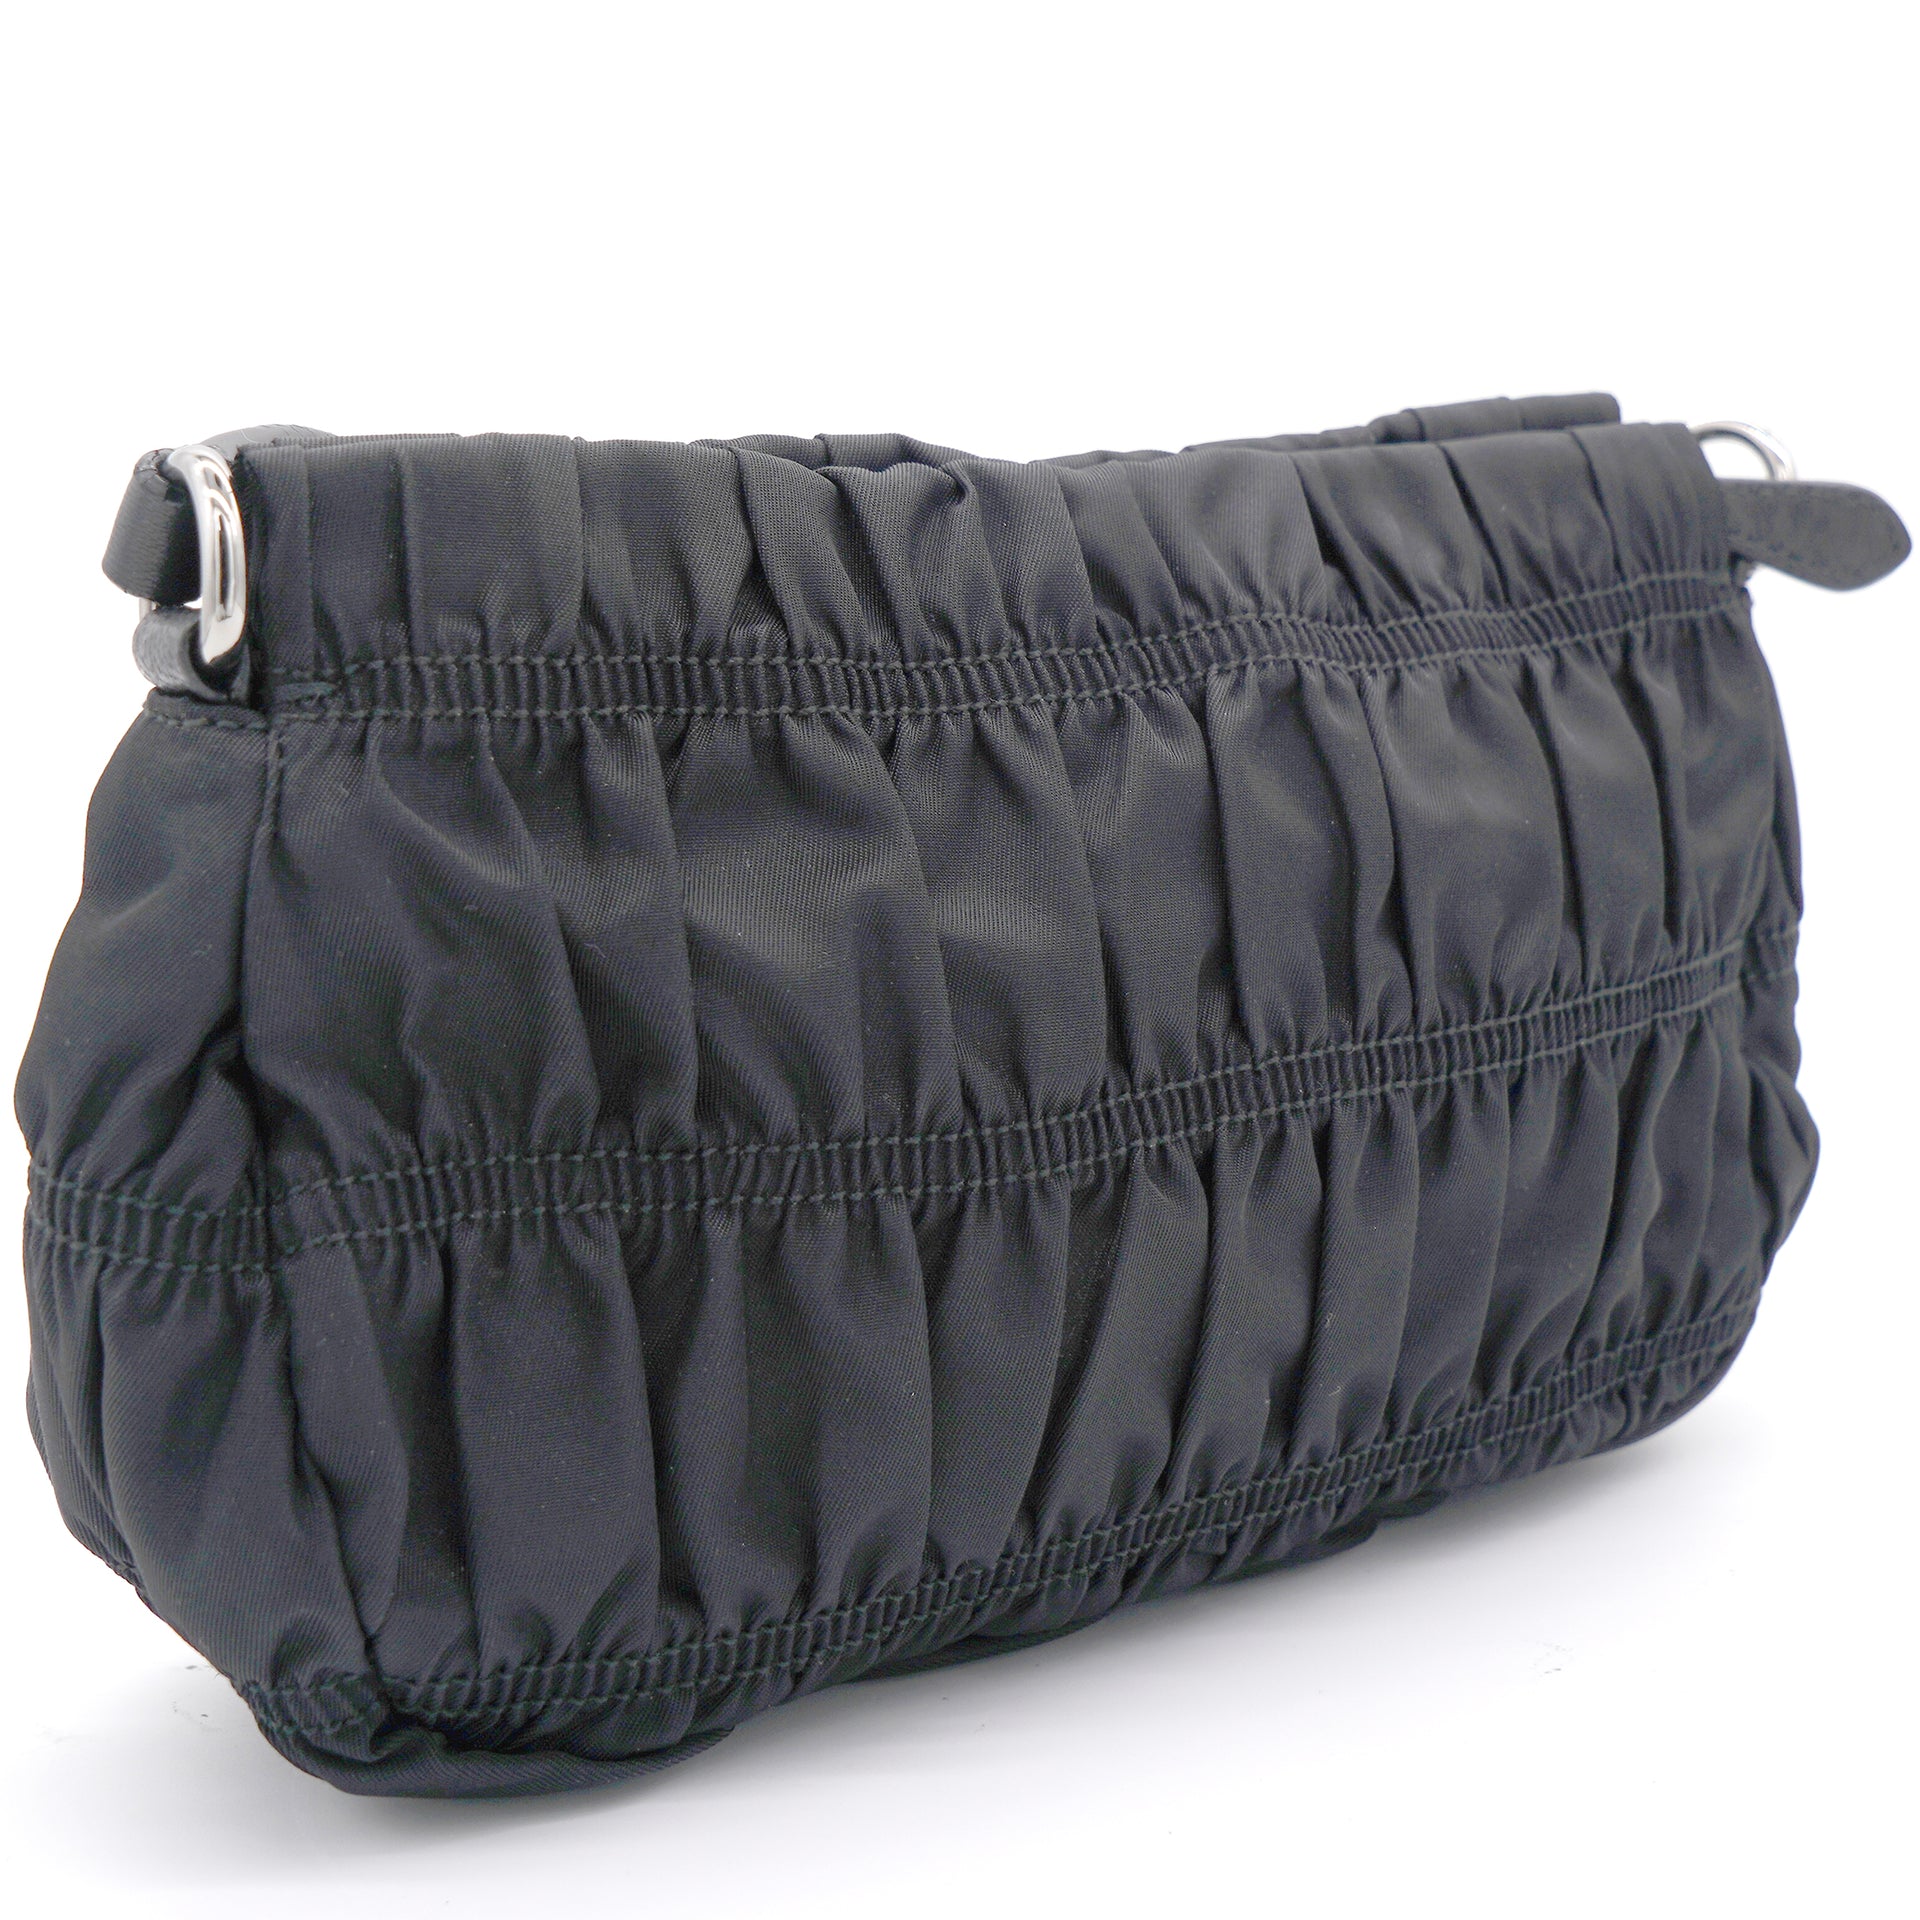 100% Authentic PRADA Nylon Shoulder Bag Noir